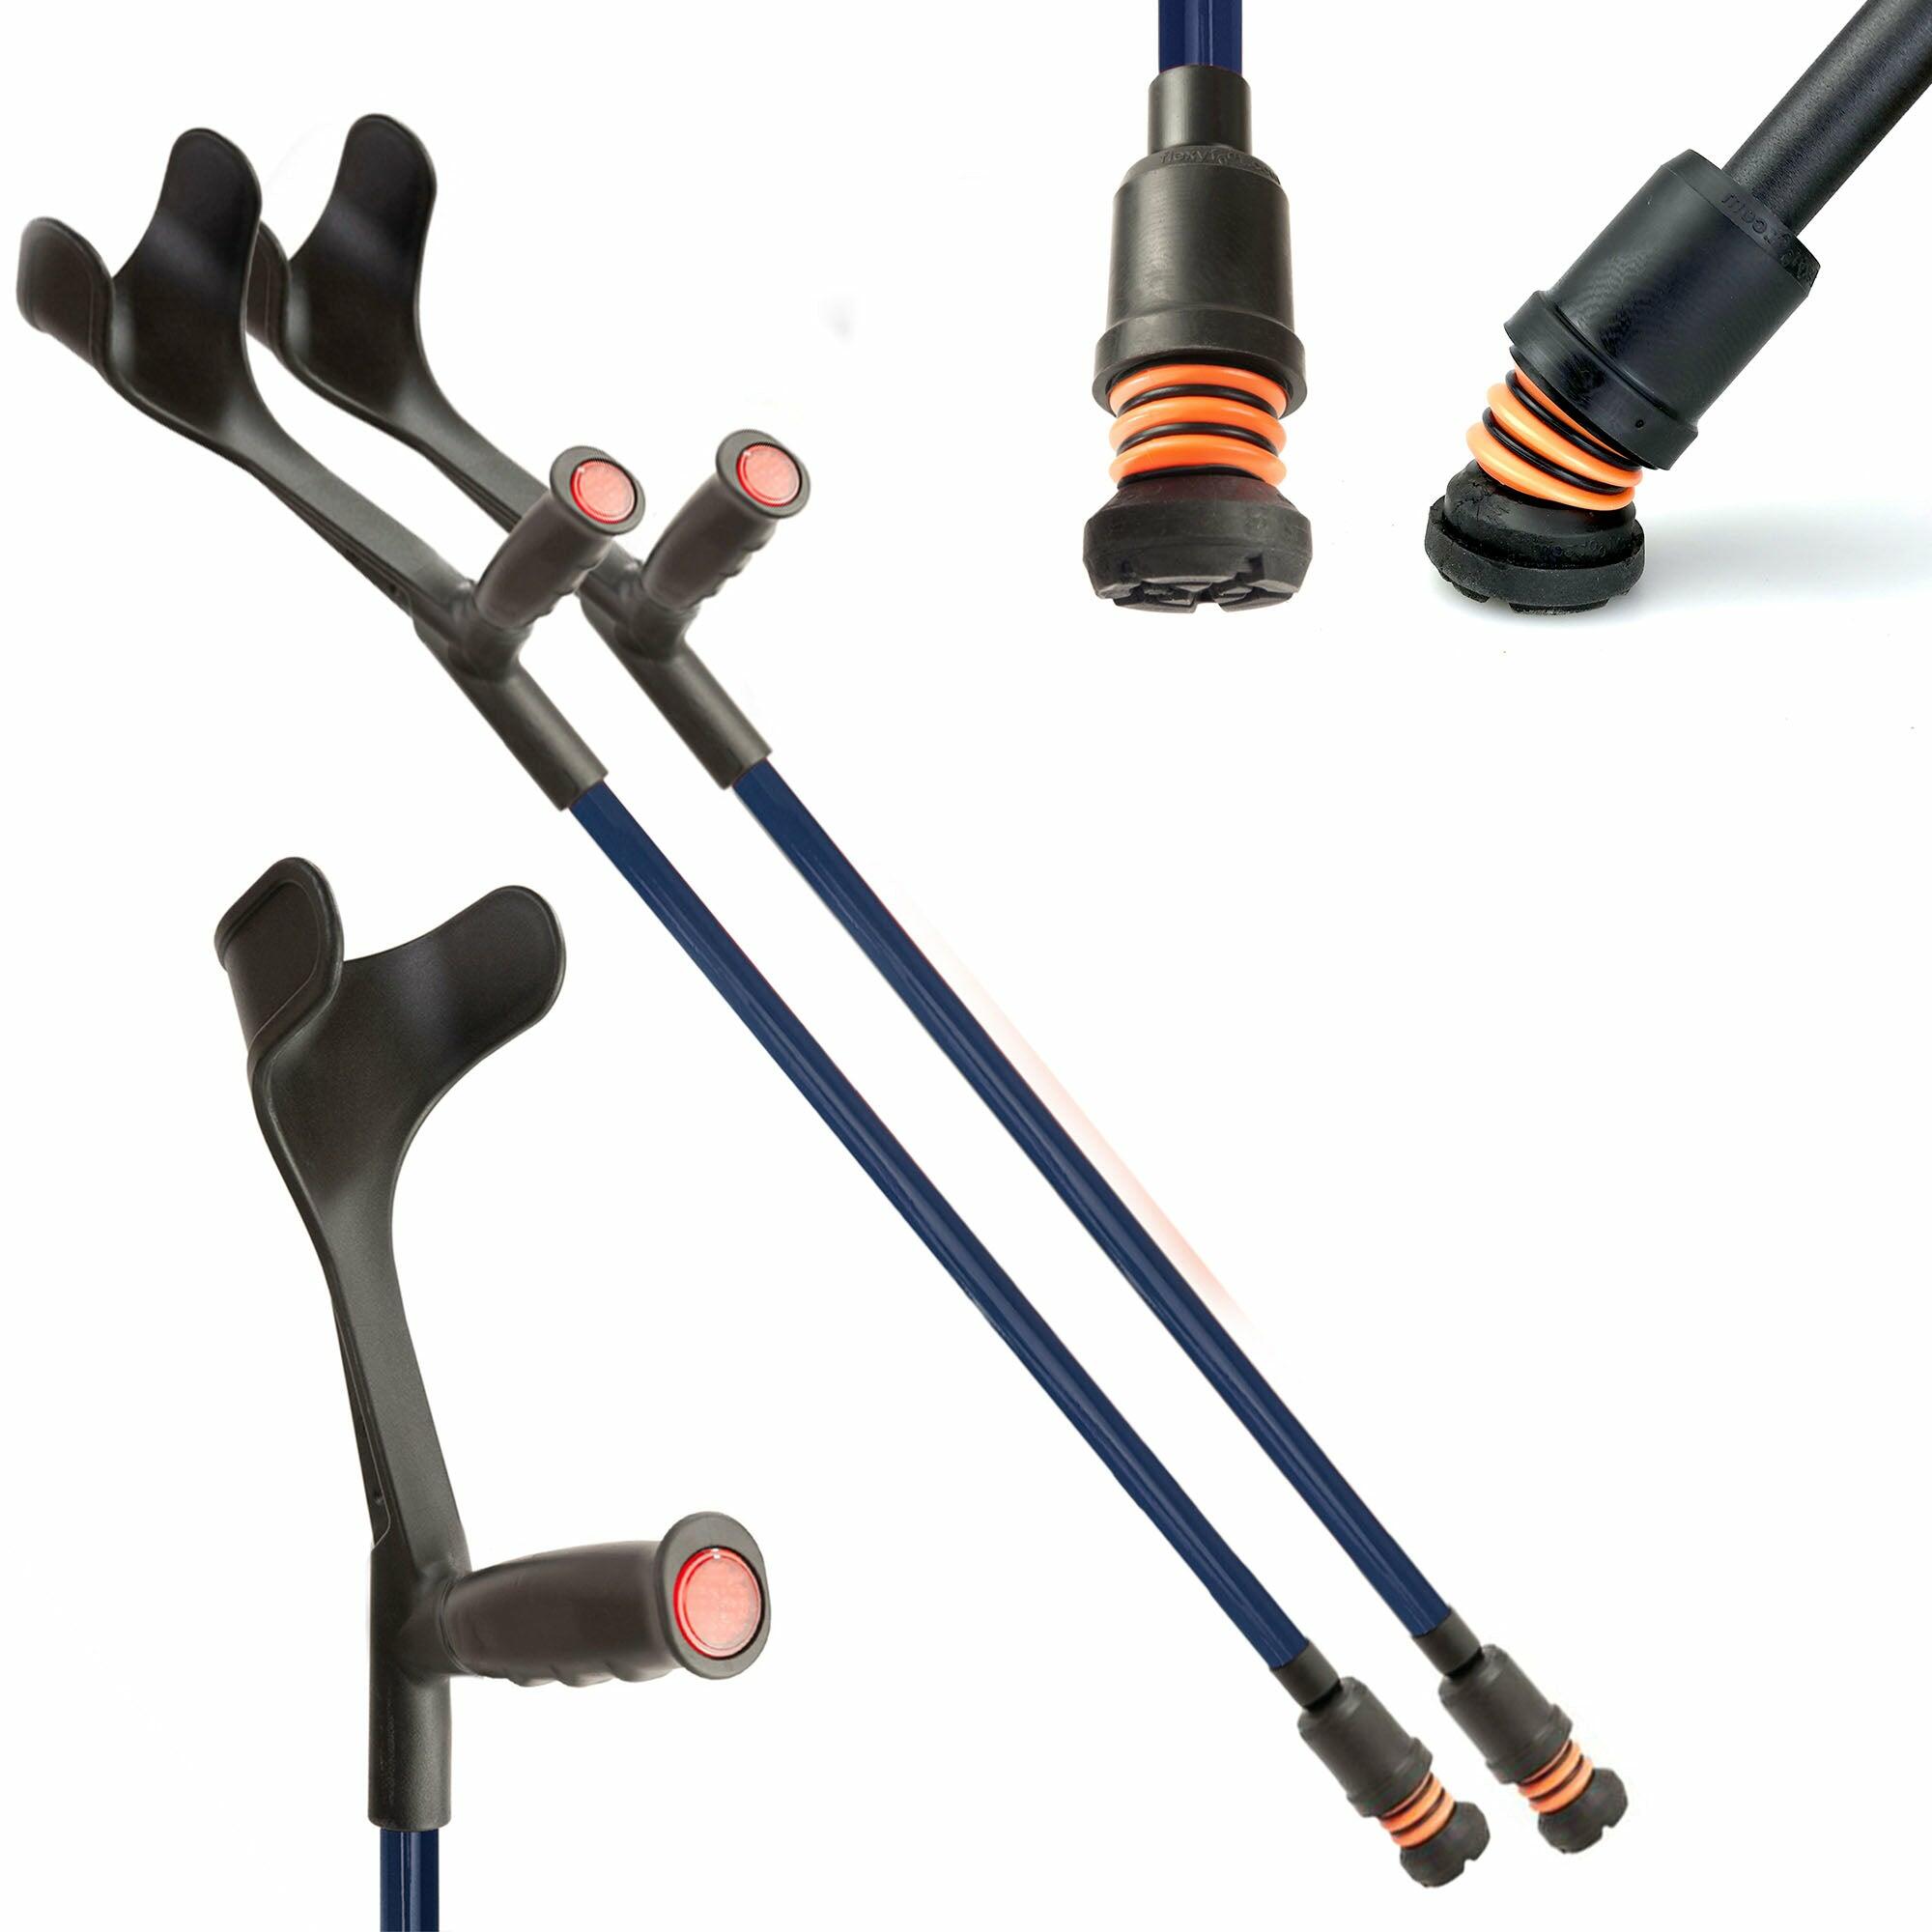 A pair of blue Flexyfoot Soft Grip Open Cuff Crutches